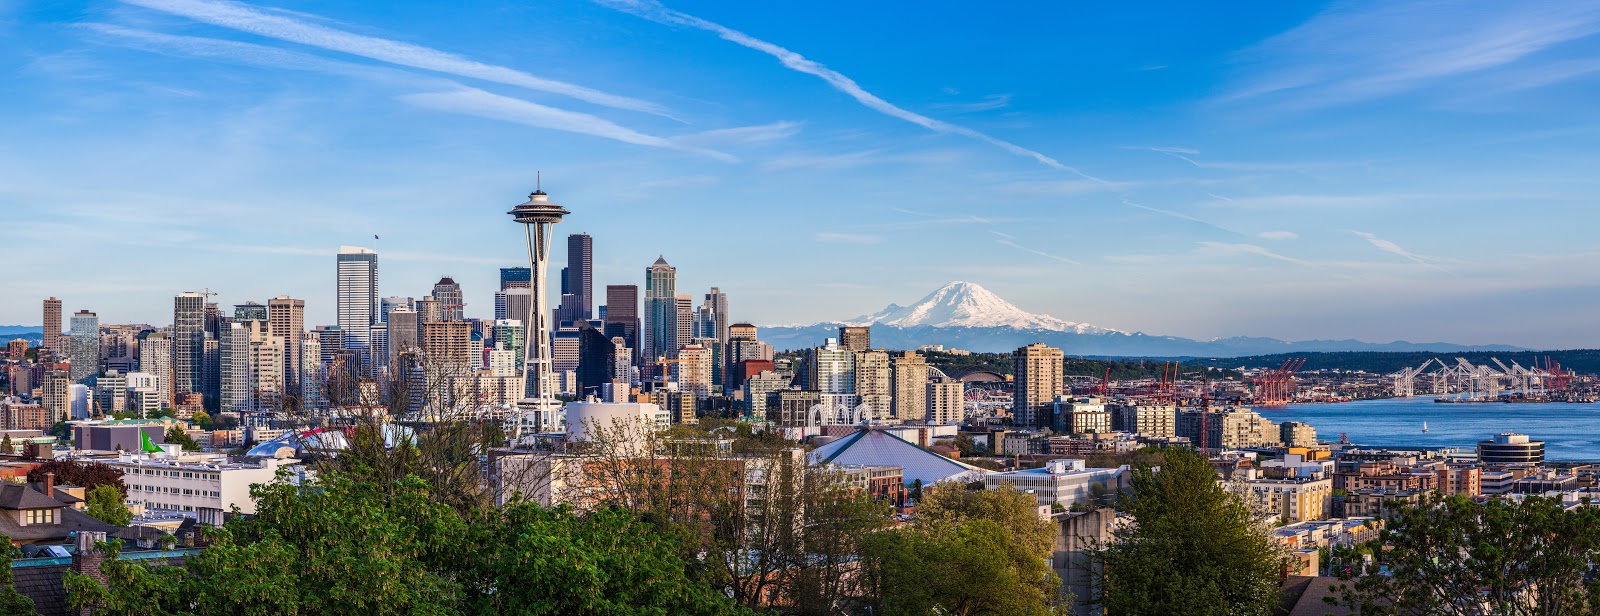 Panorama view of Seattle downtown skyline and Mt. Rainier, Washington.